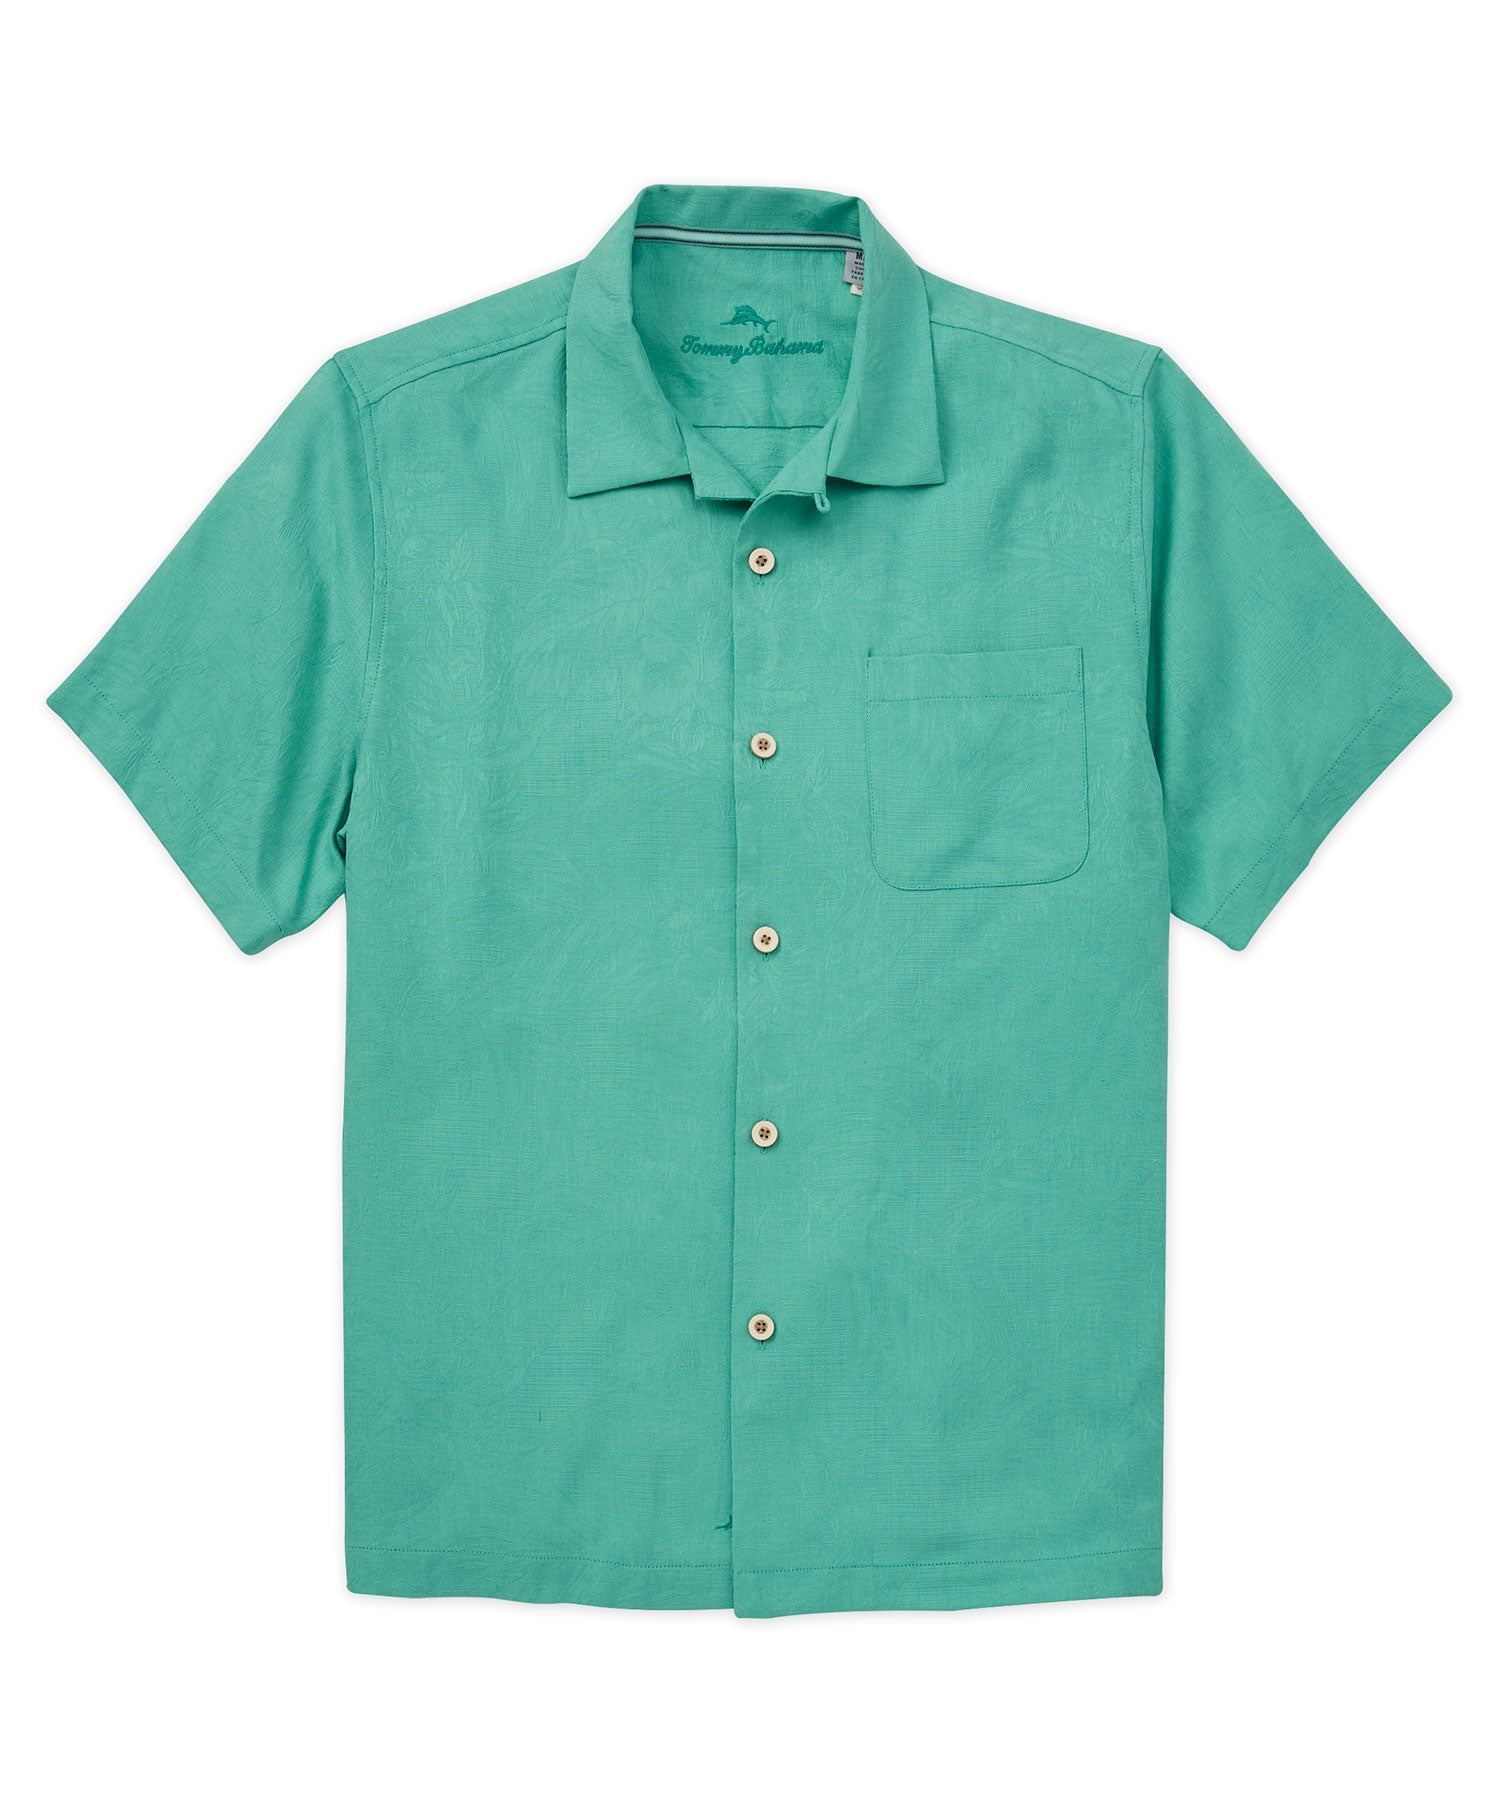 Tommy Bahama Short Sleeve Tropic Isles Camp Shirt, Men's Big & Tall